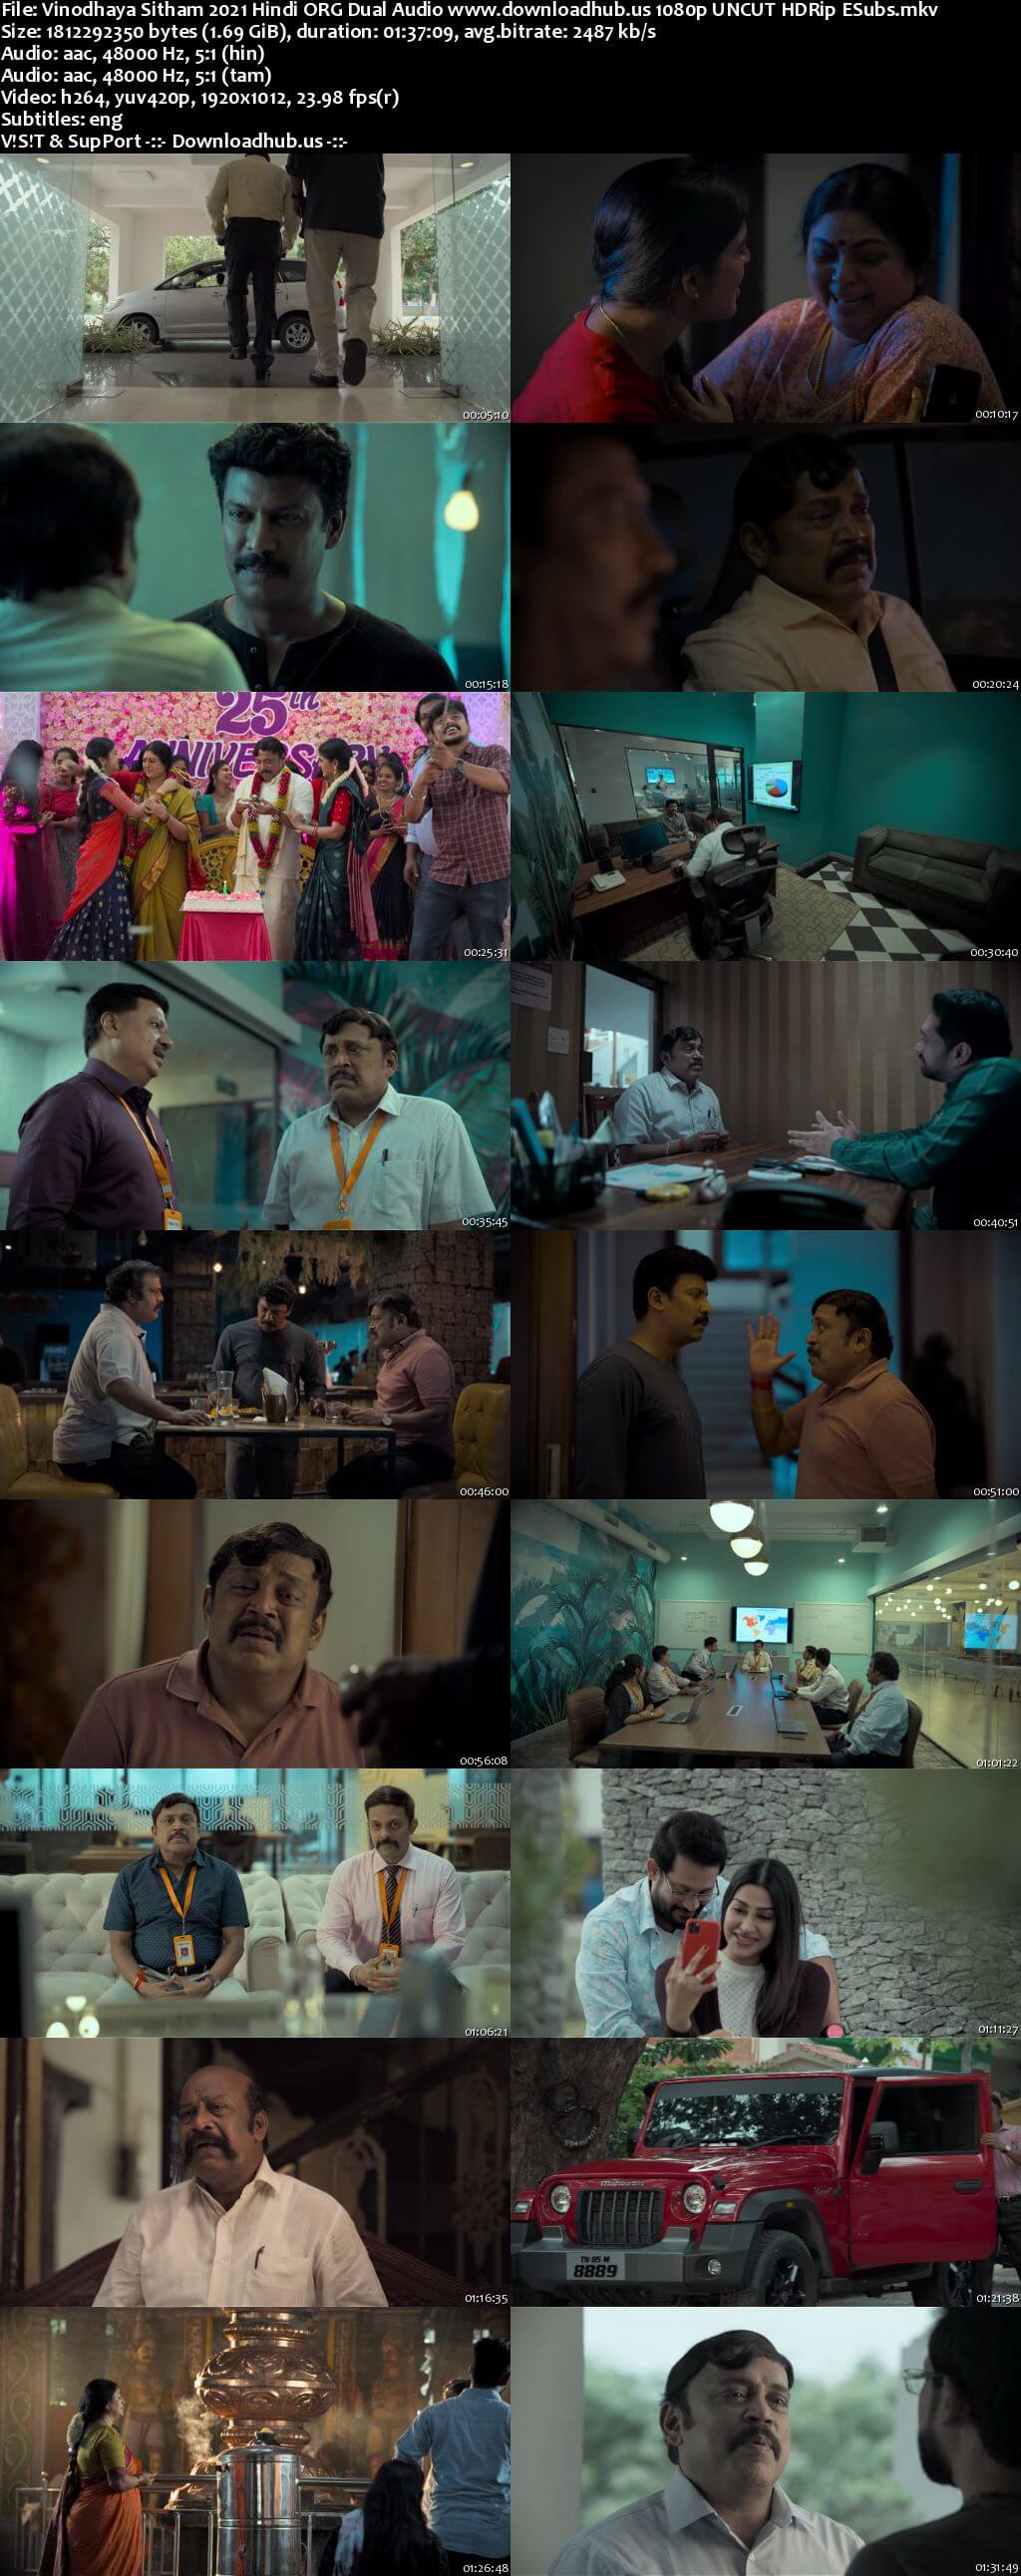 Vinodhaya Sitham 2021 Hindi ORG Dual Audio Movie DD5.1 1080p 720p 480p UNCUT HDRip ESubs x264 HEVC